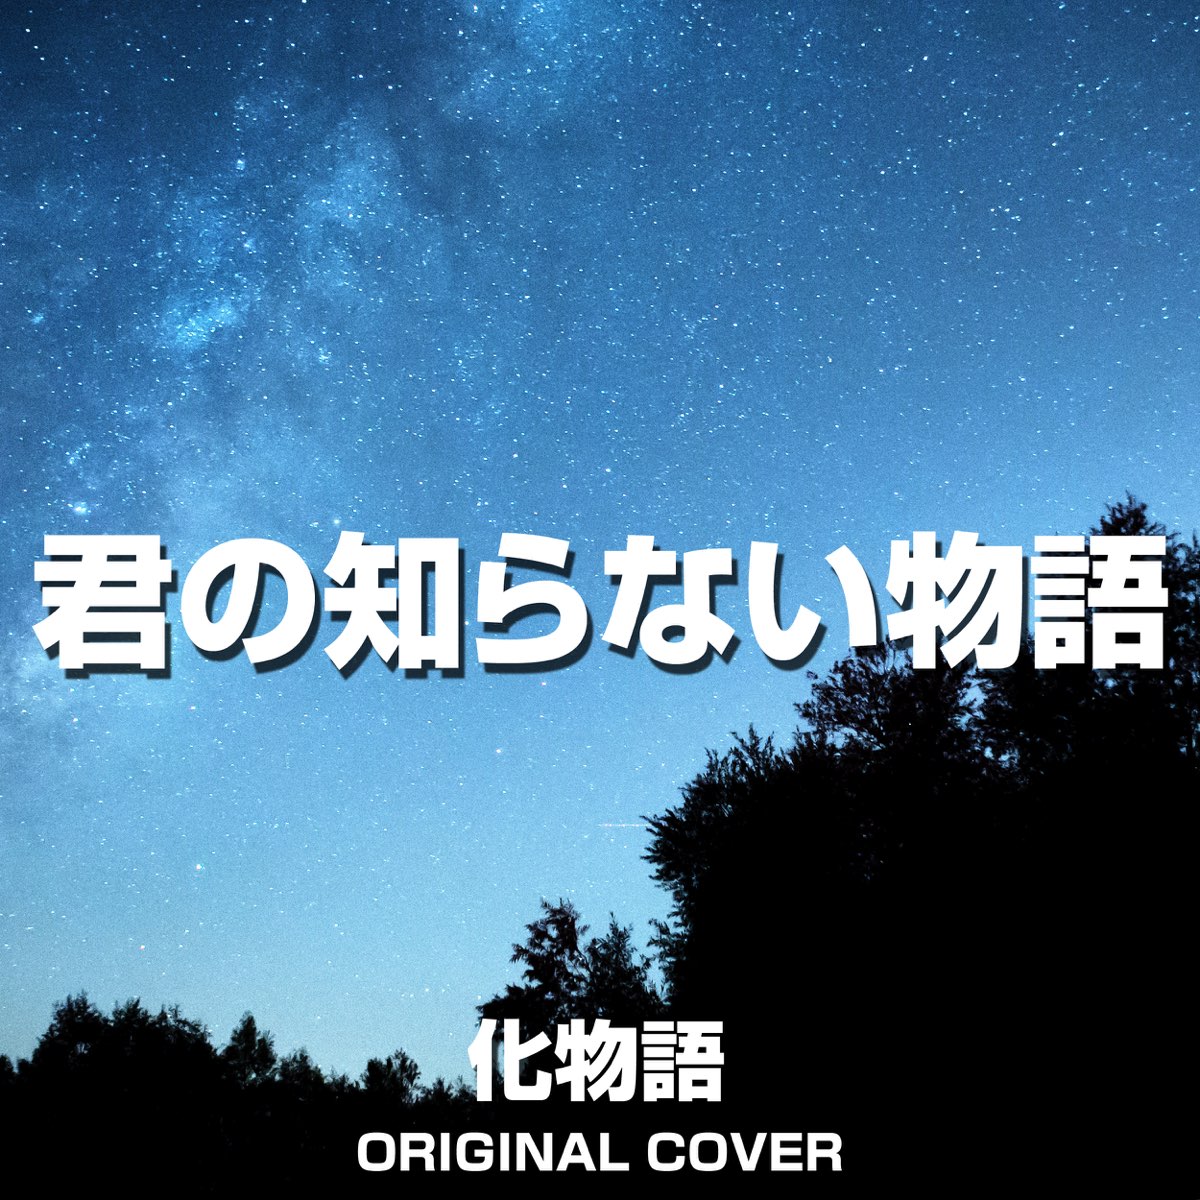 Kimino Shiranai Monogatari From Ghost Story Single By Niyari On Apple Music